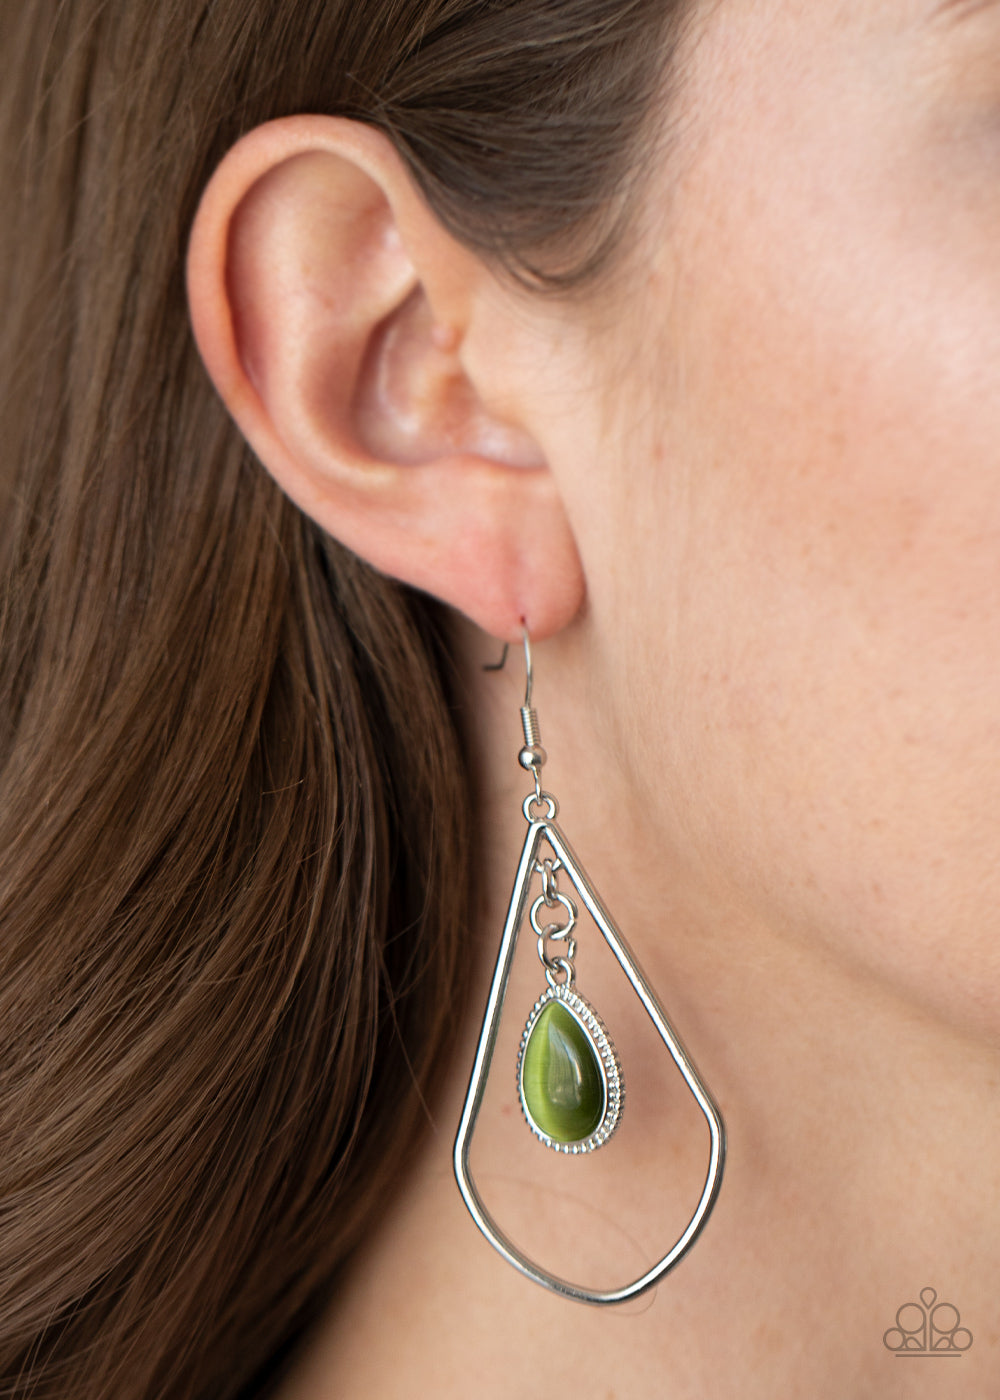 Paparazzi Earring ~ Ethereal Elegance - Green Cat's Eye Earring